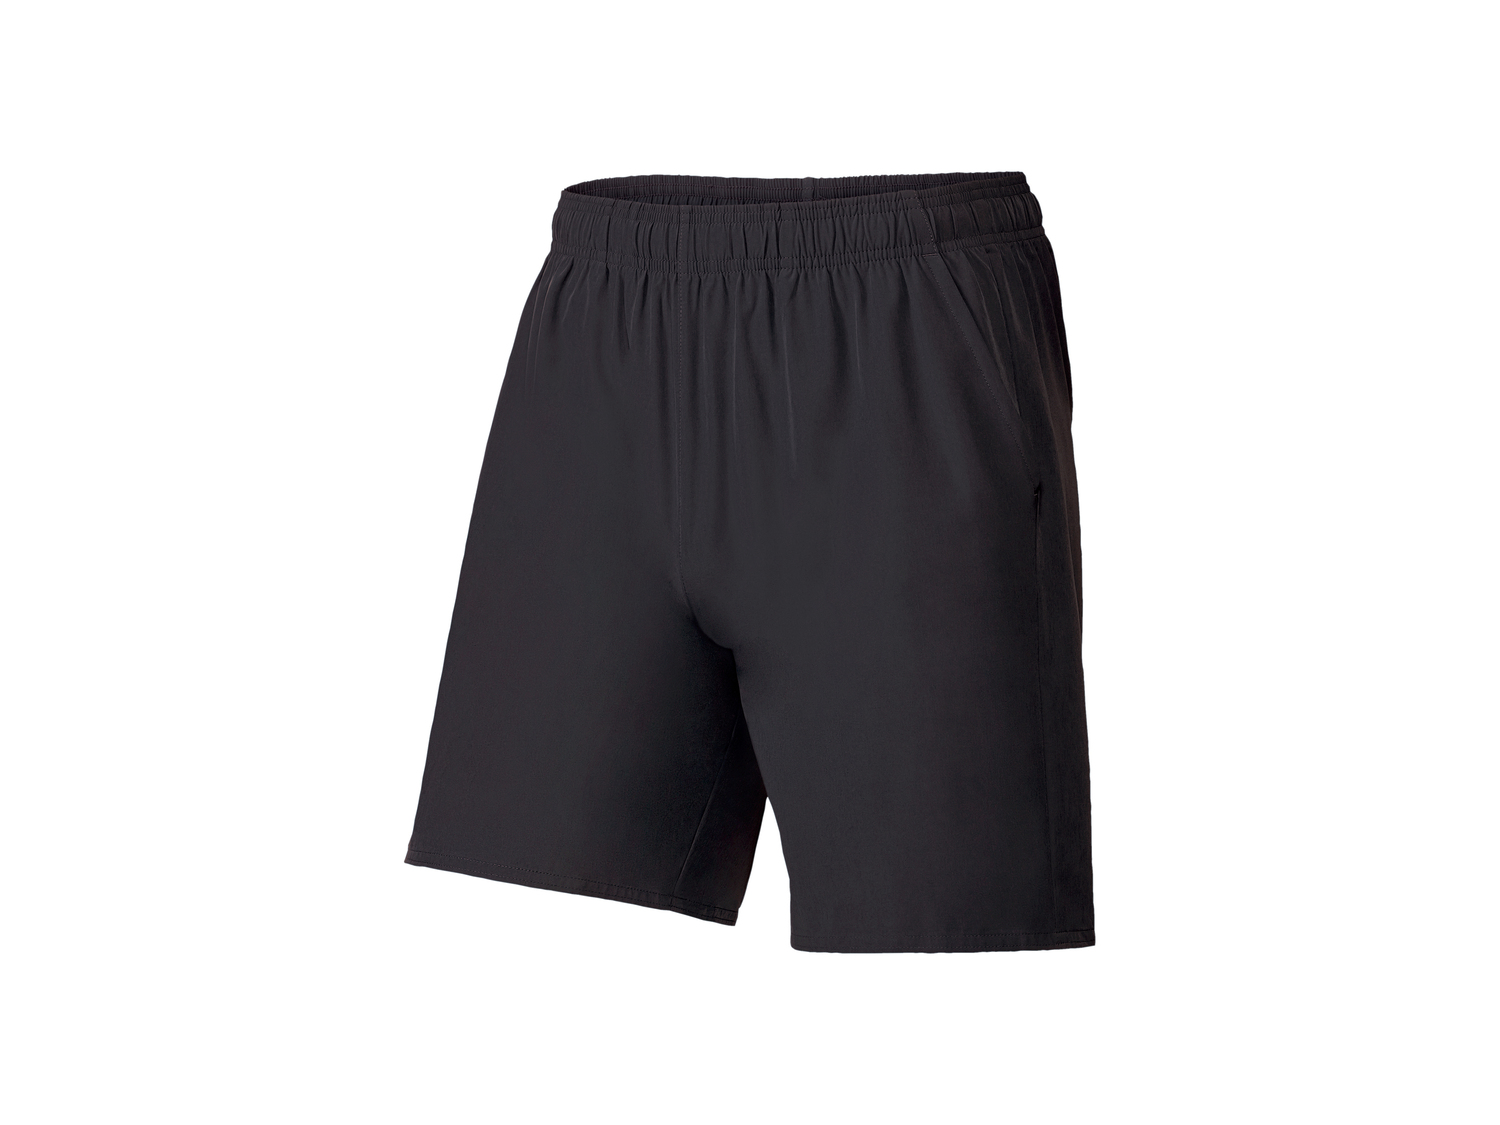 Shorts sportivi da uomo Crivit, prezzo 5.99 &#8364; 
Misure: S-XL 
- Prodotta ...